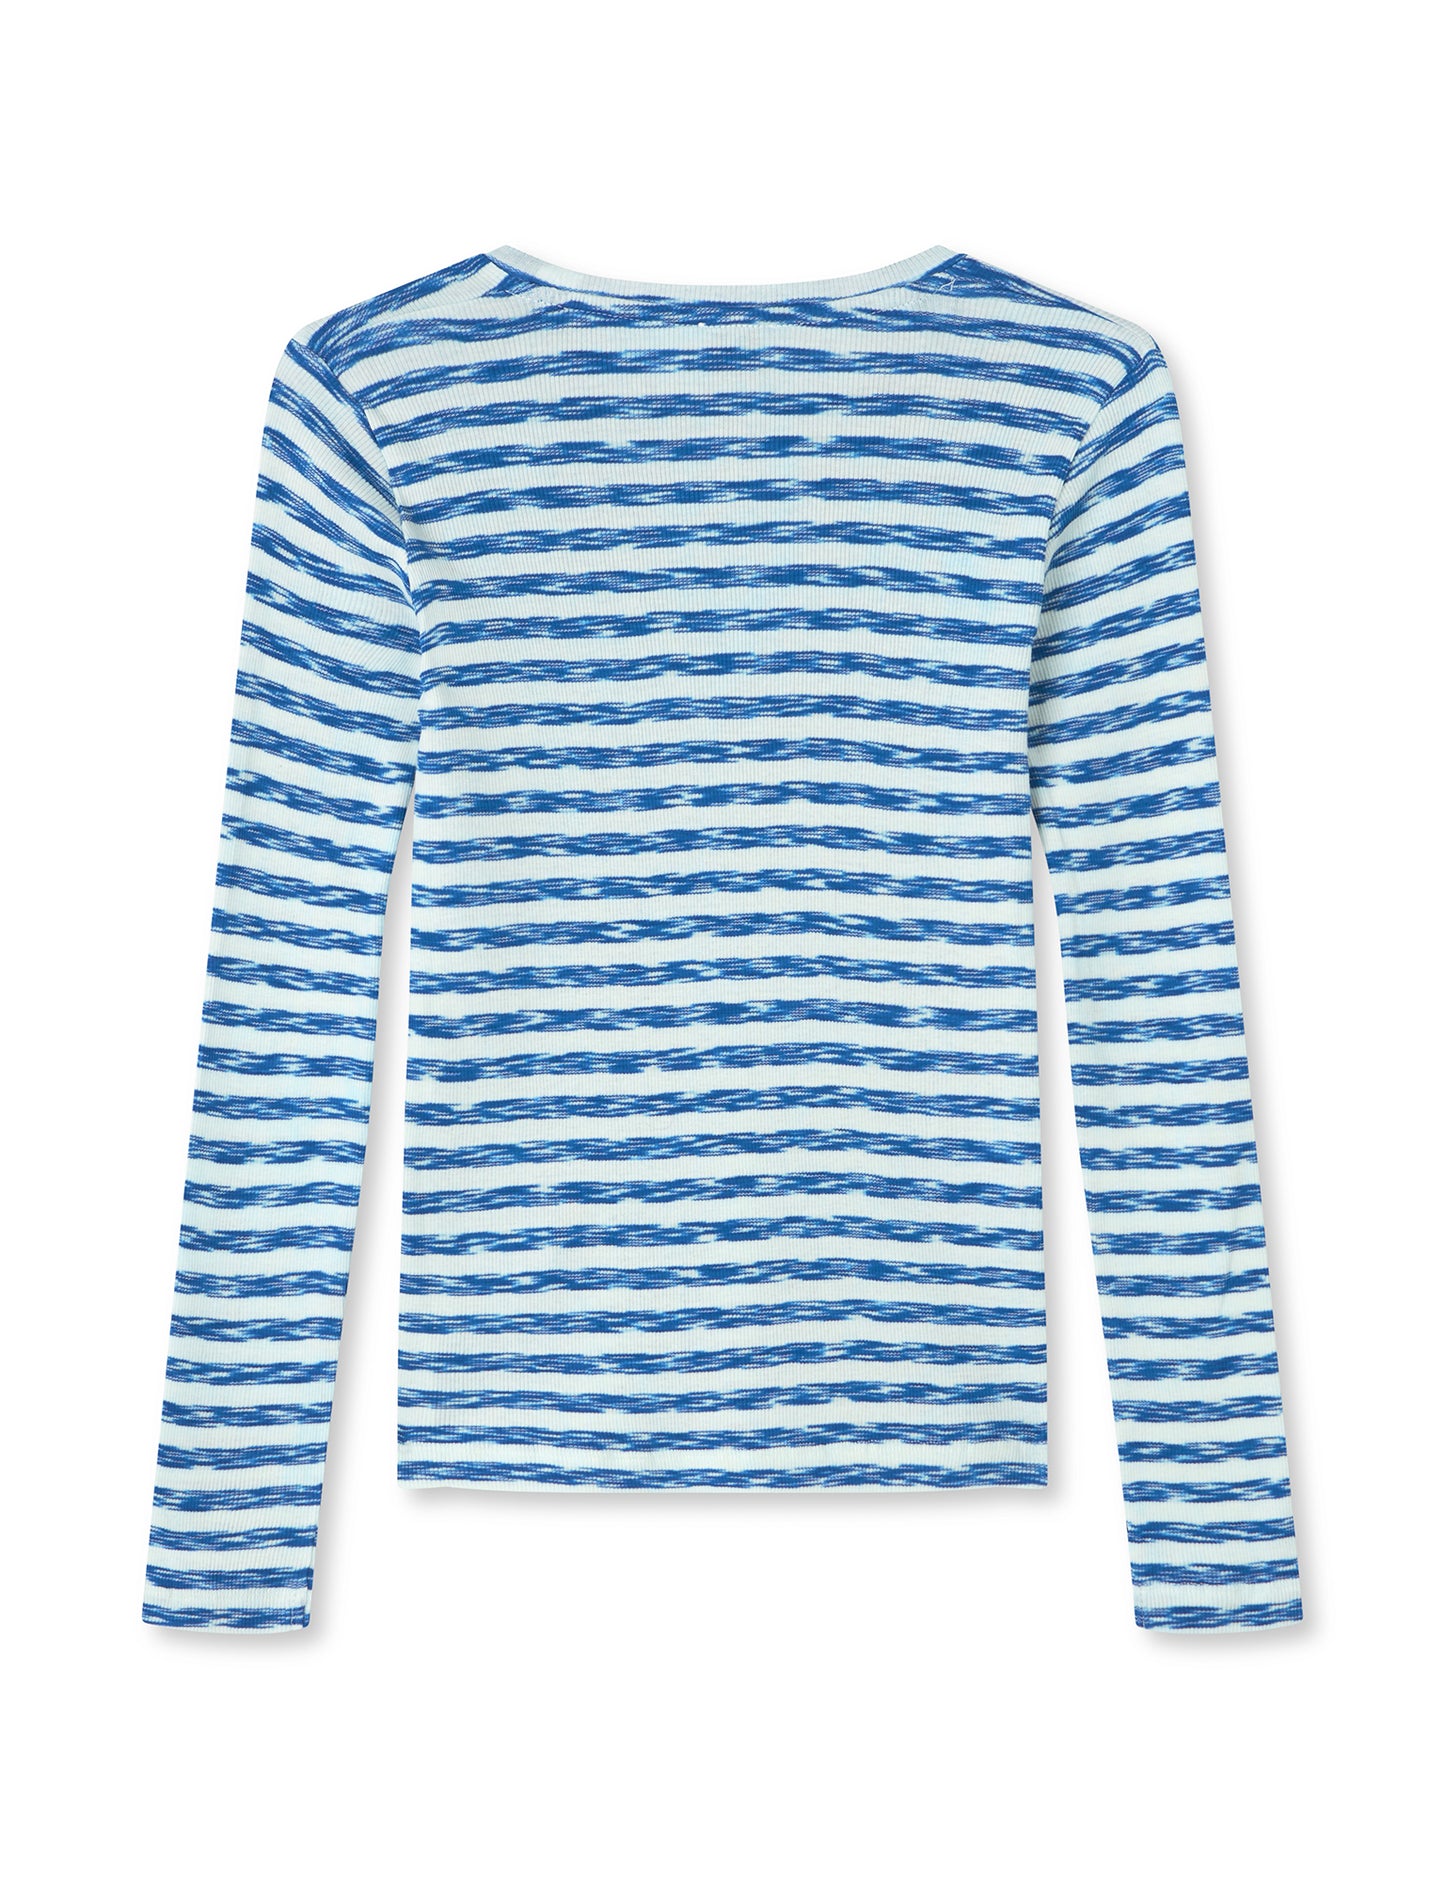 2x2 Cotton Stripe Talino Tee L/S, 2x2 Stripe Multi Blue